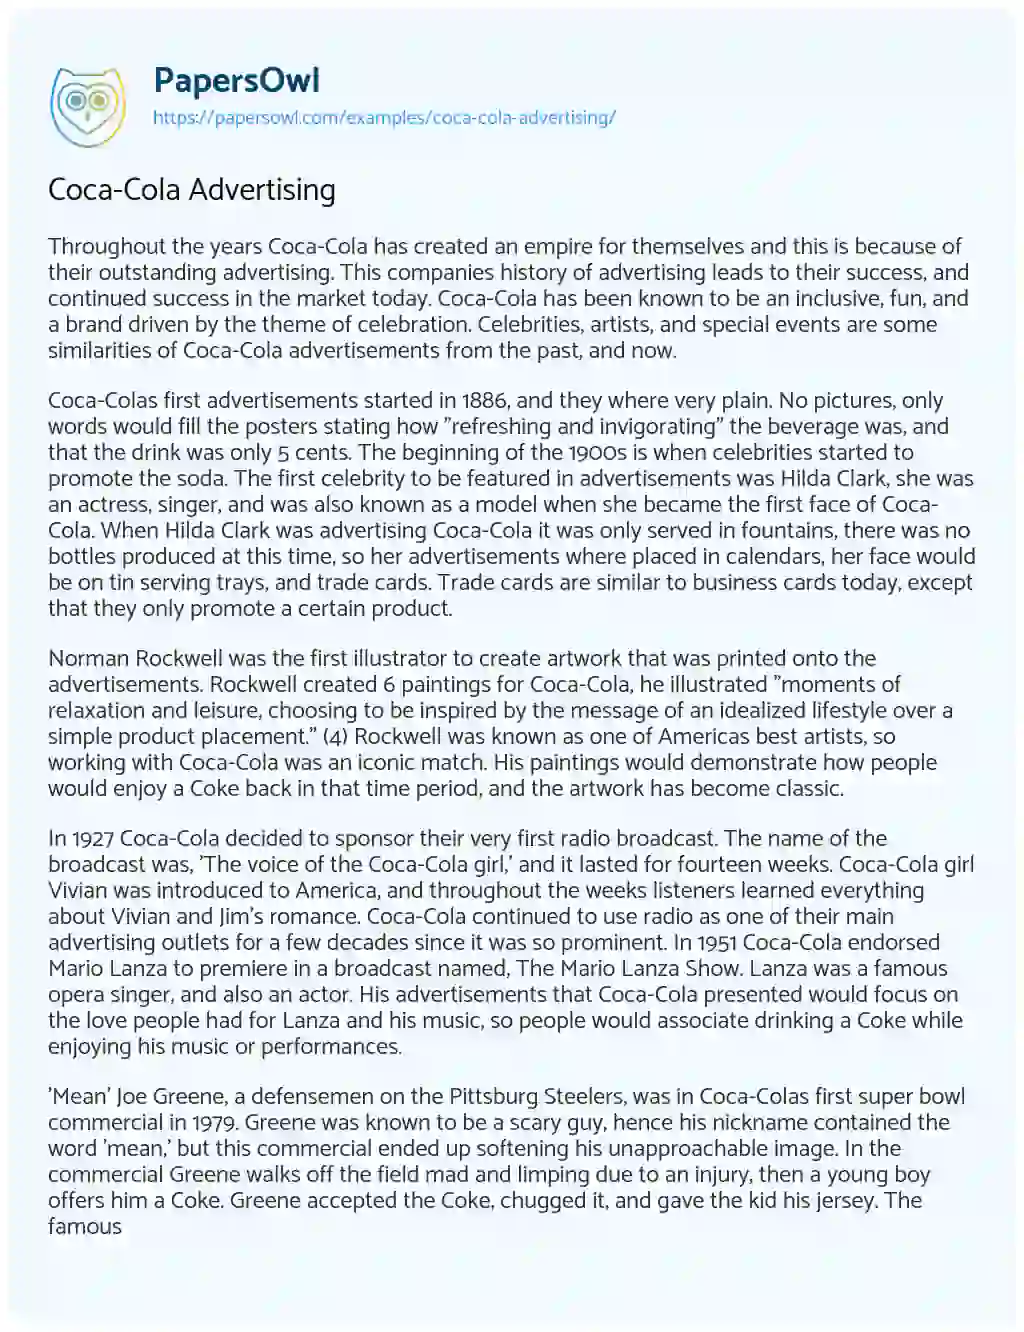 Essay on Coca-Cola Advertising